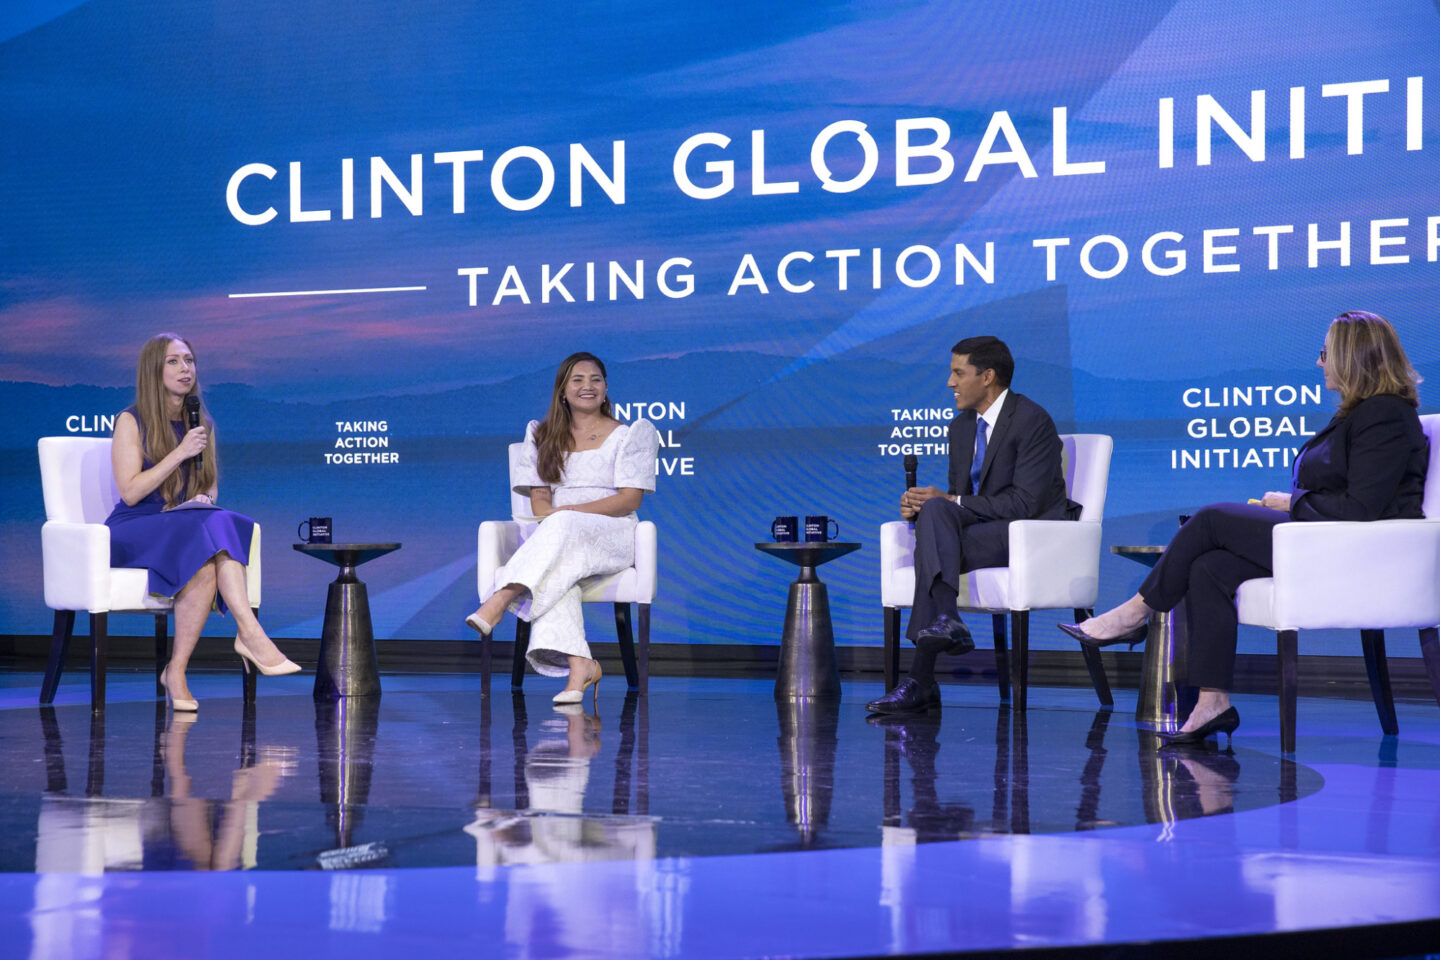 Chelsea Clinton, Marinel Sumook Ubaldo, Dr. Rajiv Shah, and Peggy Clark are seated onstage